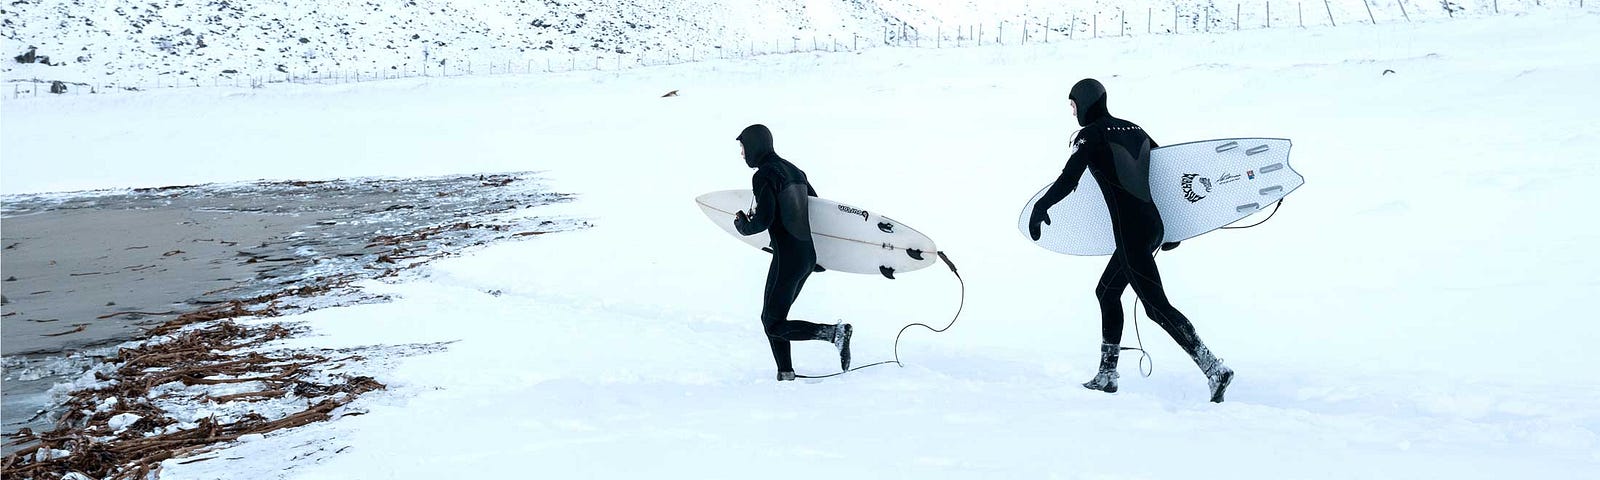 Surfers run across the snow toward Unstad beach in Norway.